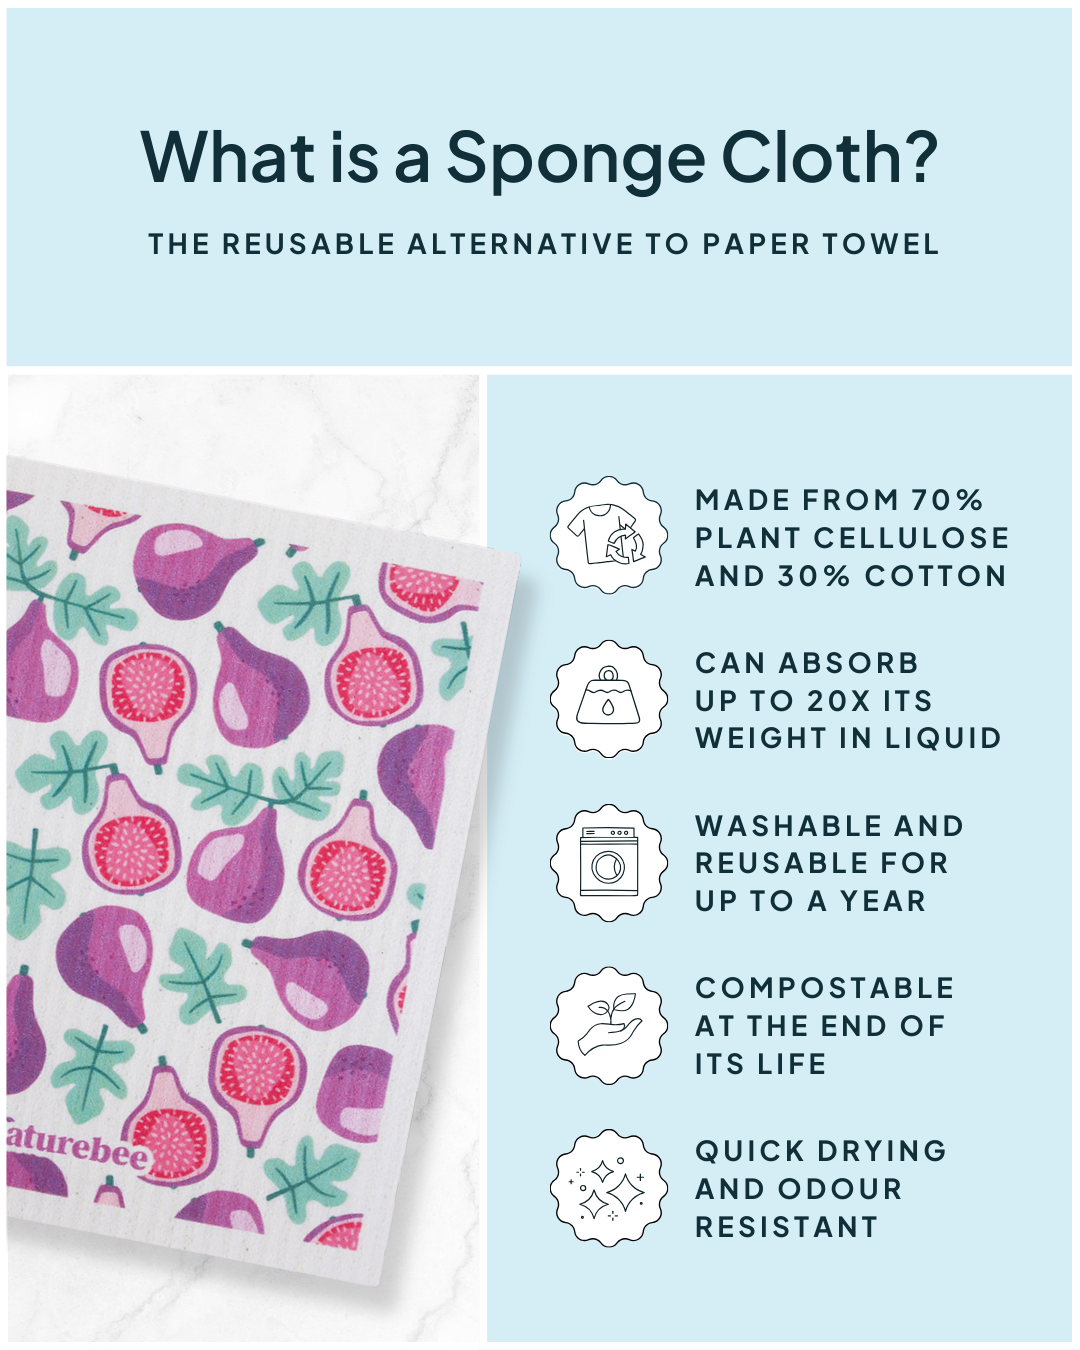 Sponge Cloth Figs | Nature Bee